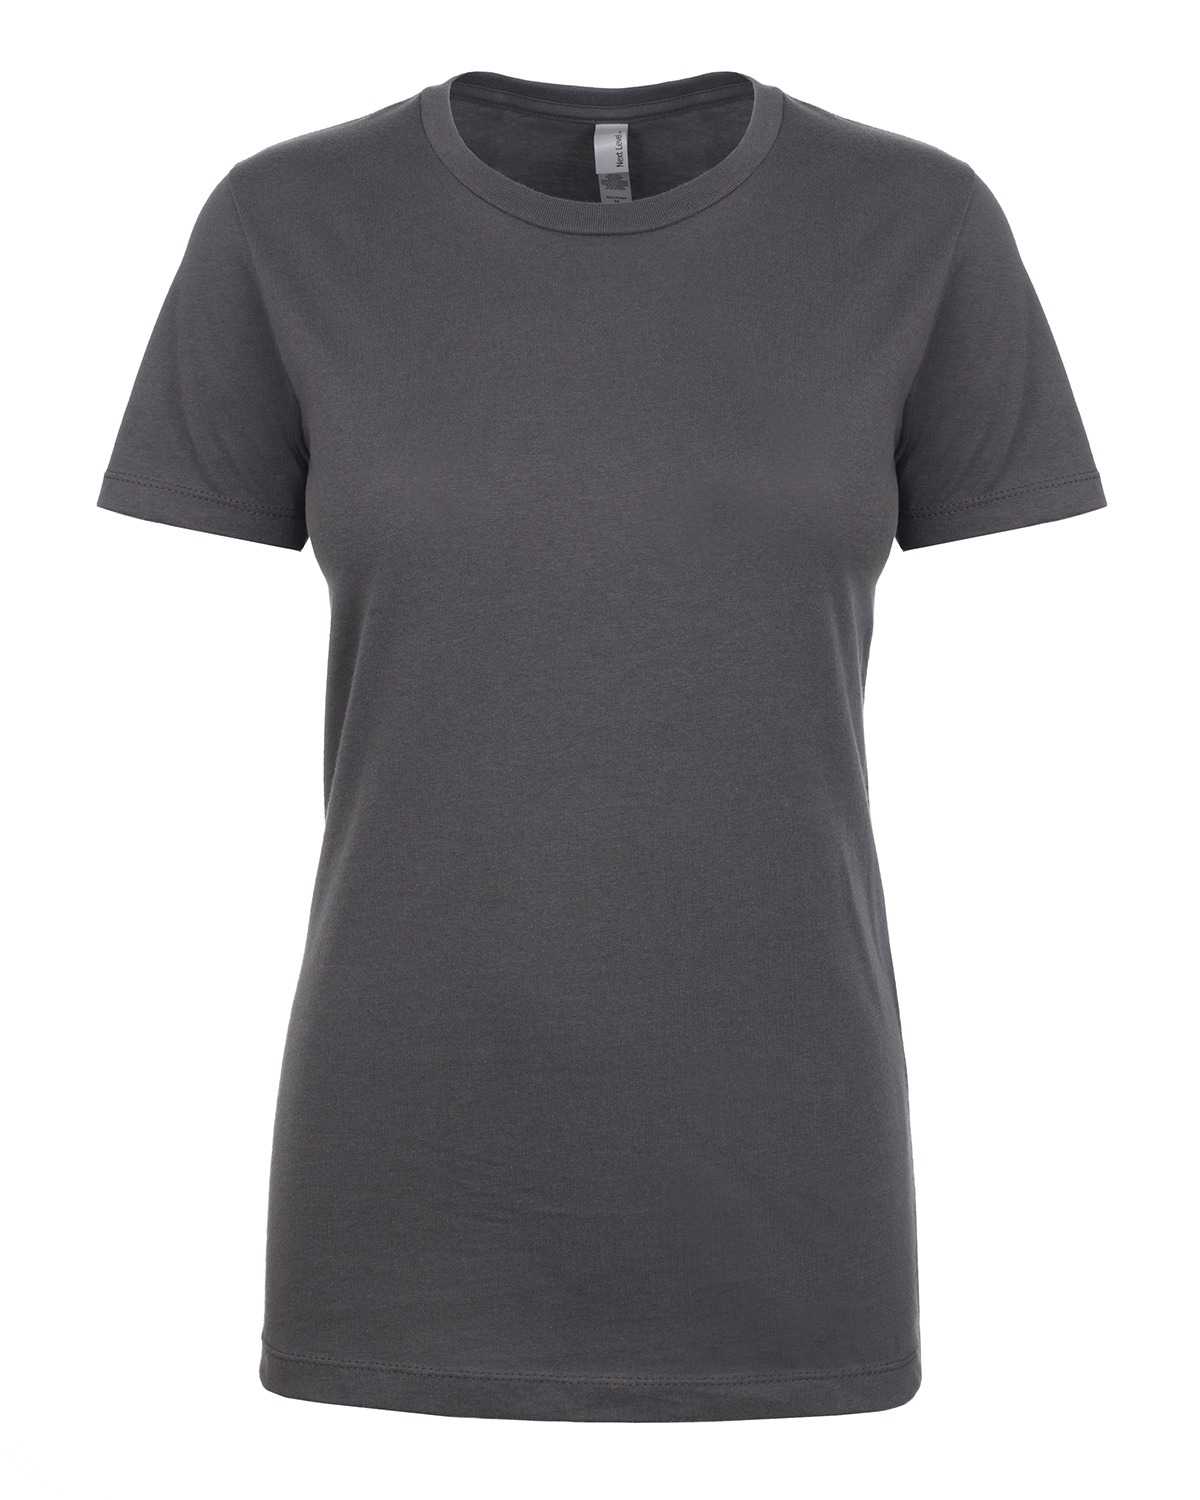 Next Level N1510 Ladies' Ideal T-Shirt | ApparelChoice.com